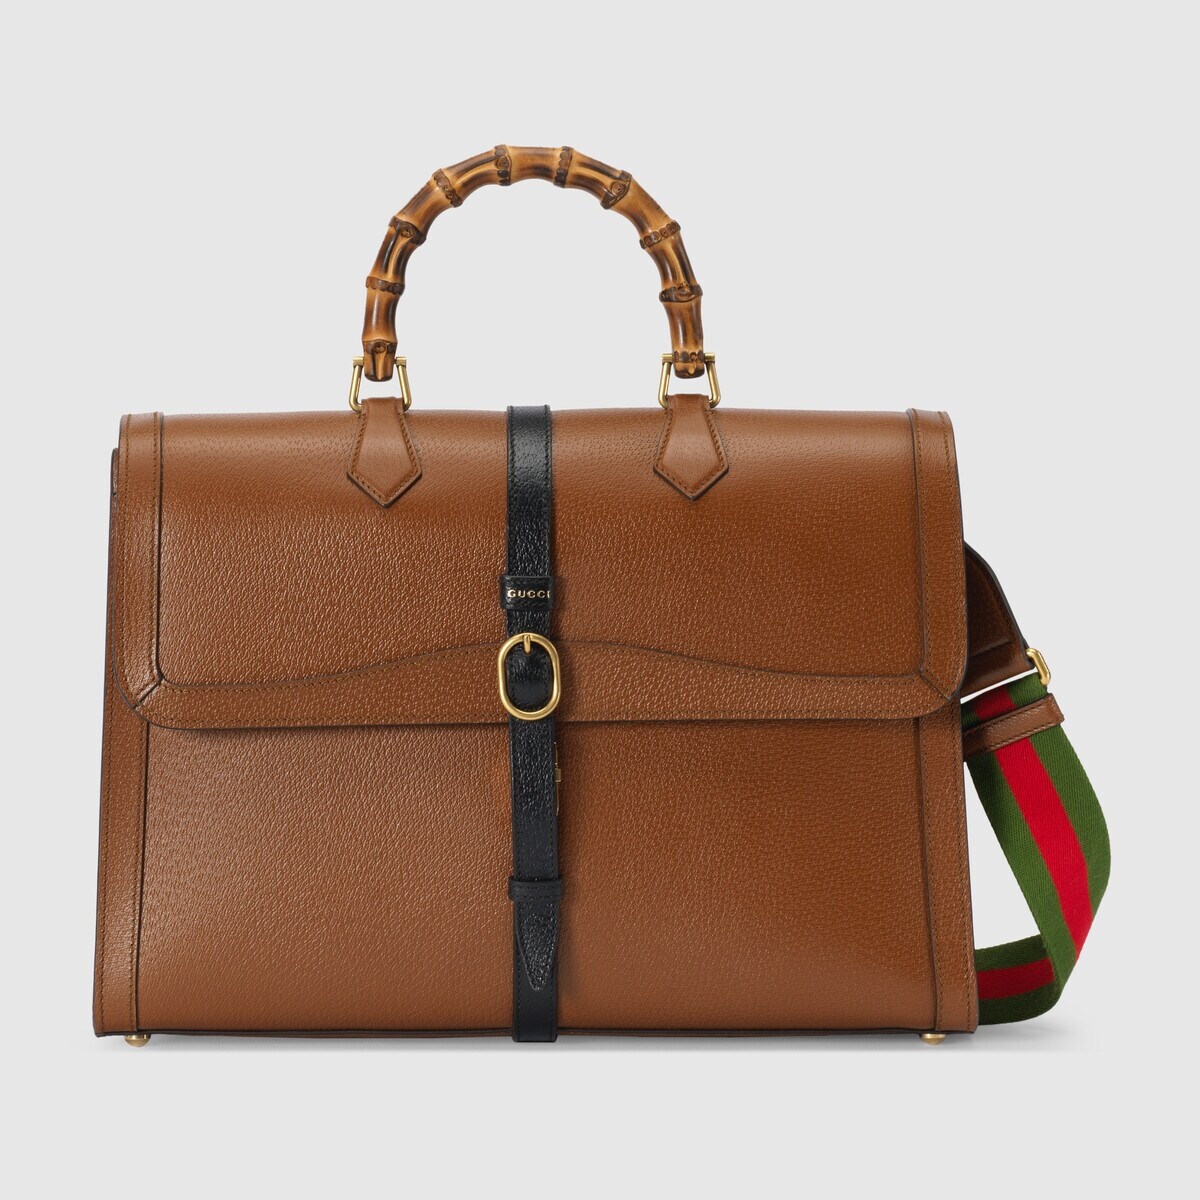 Gucci Diana briefcase - 1